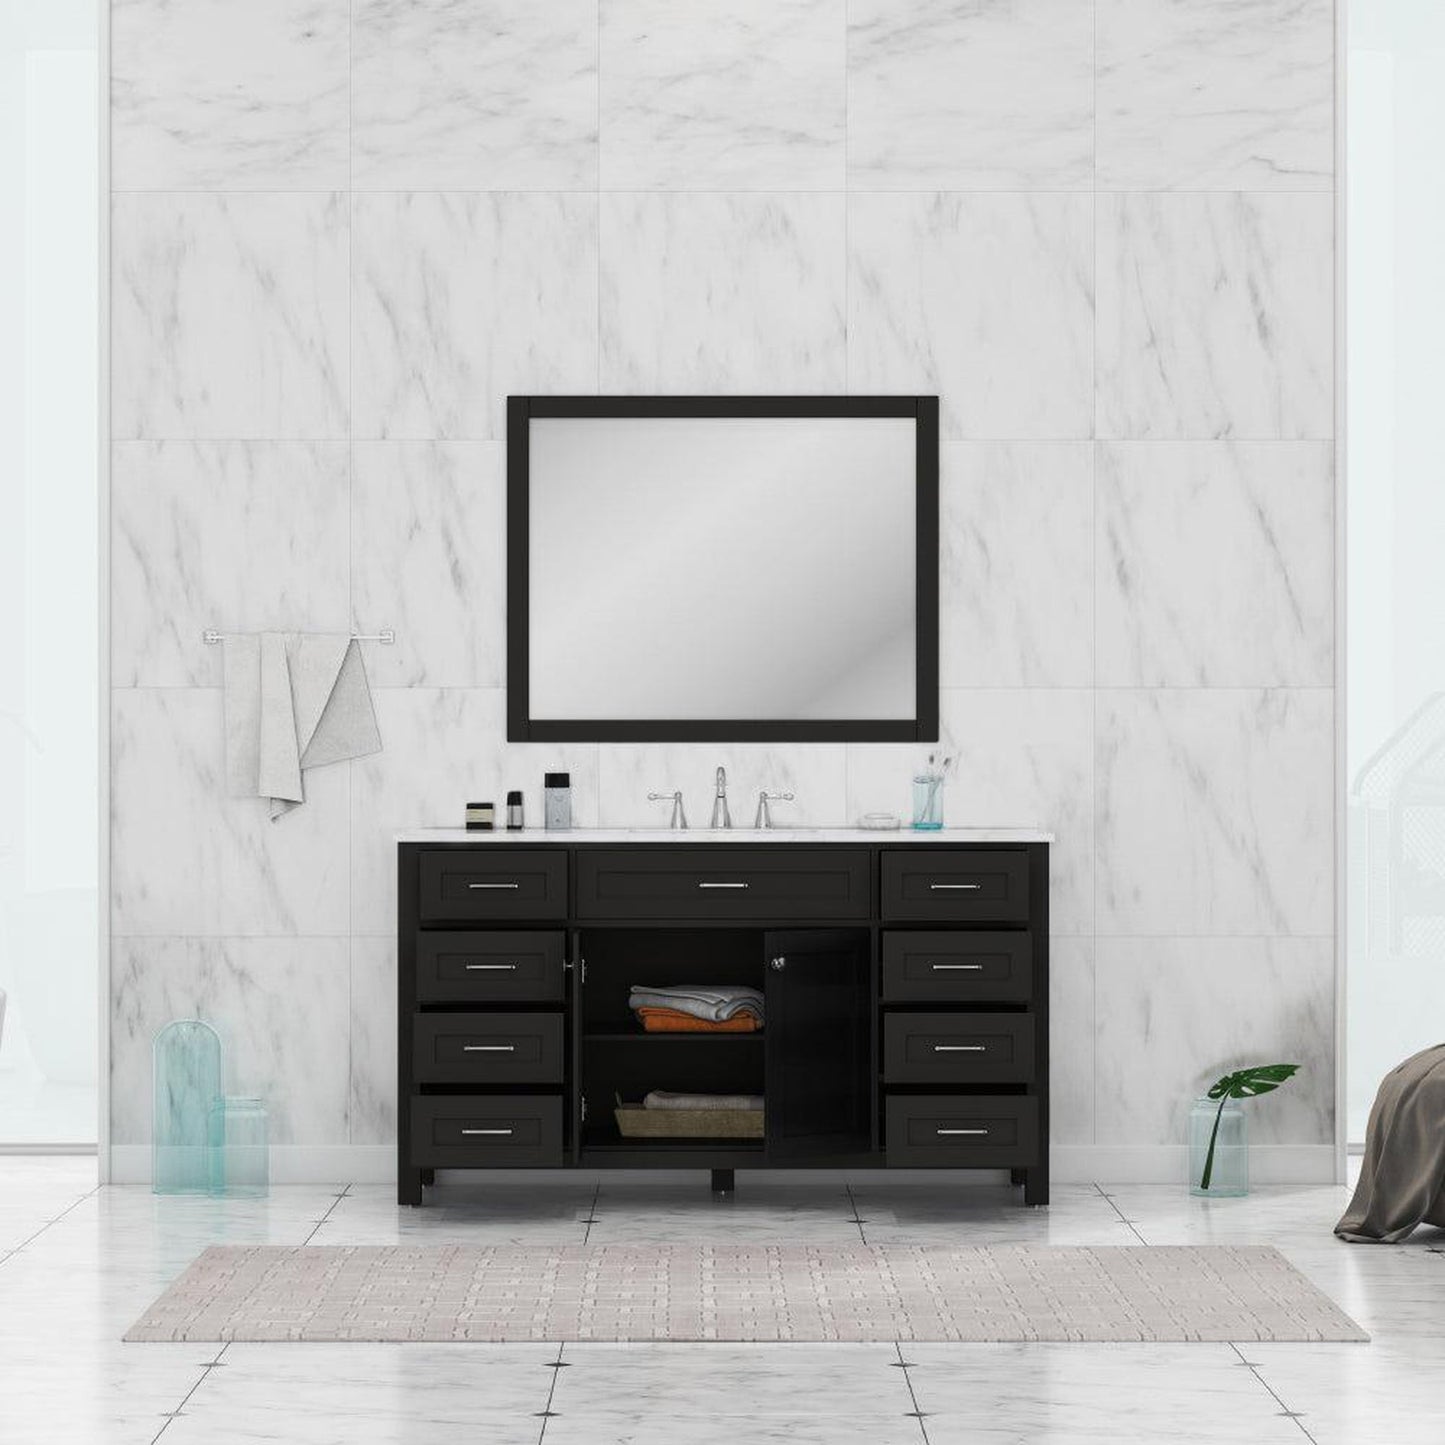 Alya Bath Norwalk 60" Single Espresso Freestanding Bathroom Vanity With Carrara Marble Top, Ceramic Sink and Wall Mounted Mirror